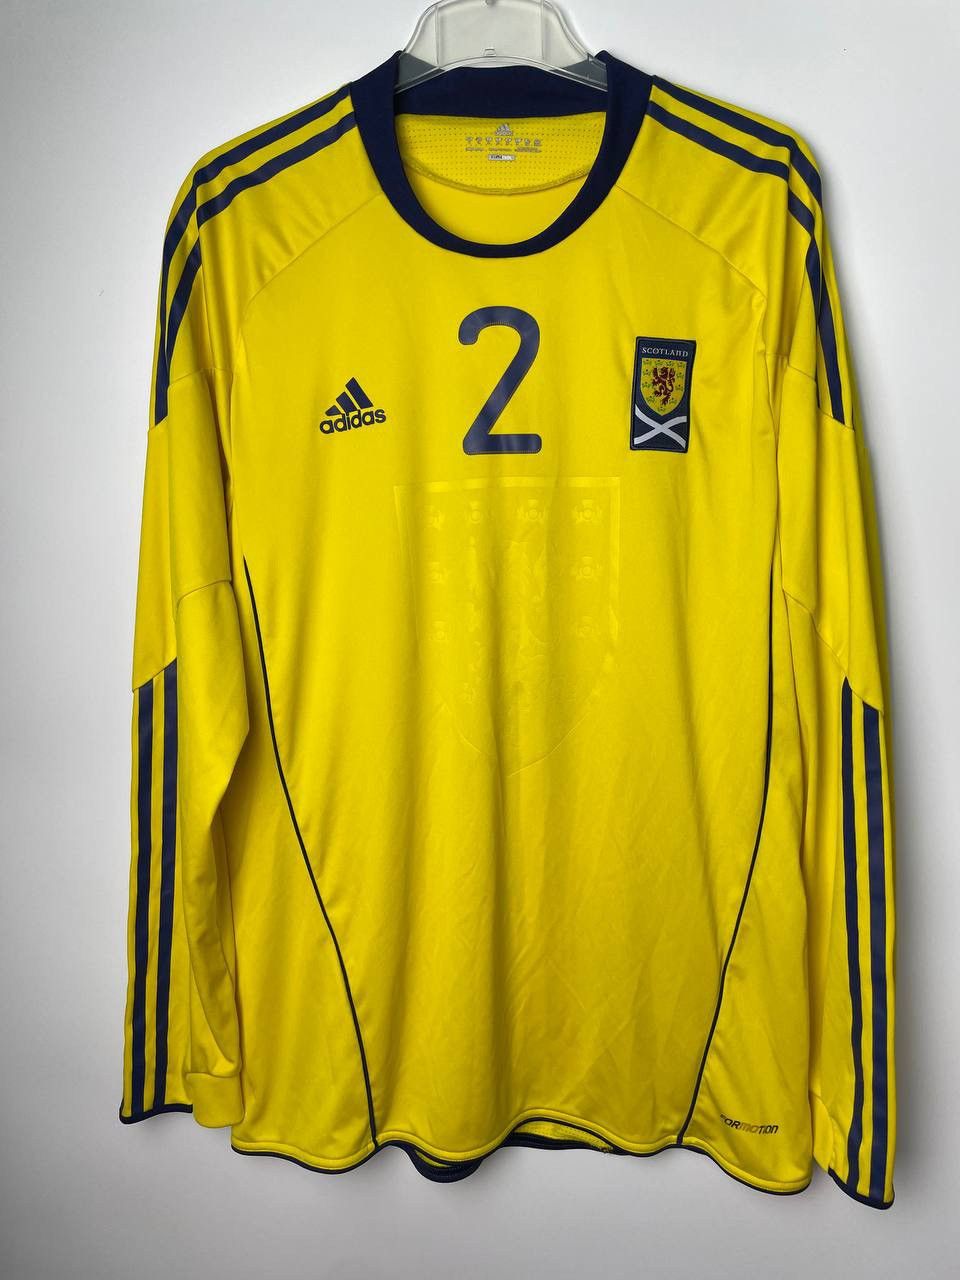 Adidas 2010-2011 adidas Scotland Away Long Sleeve Football Shirt Size US XL / EU 56 / 4 - 1 Preview